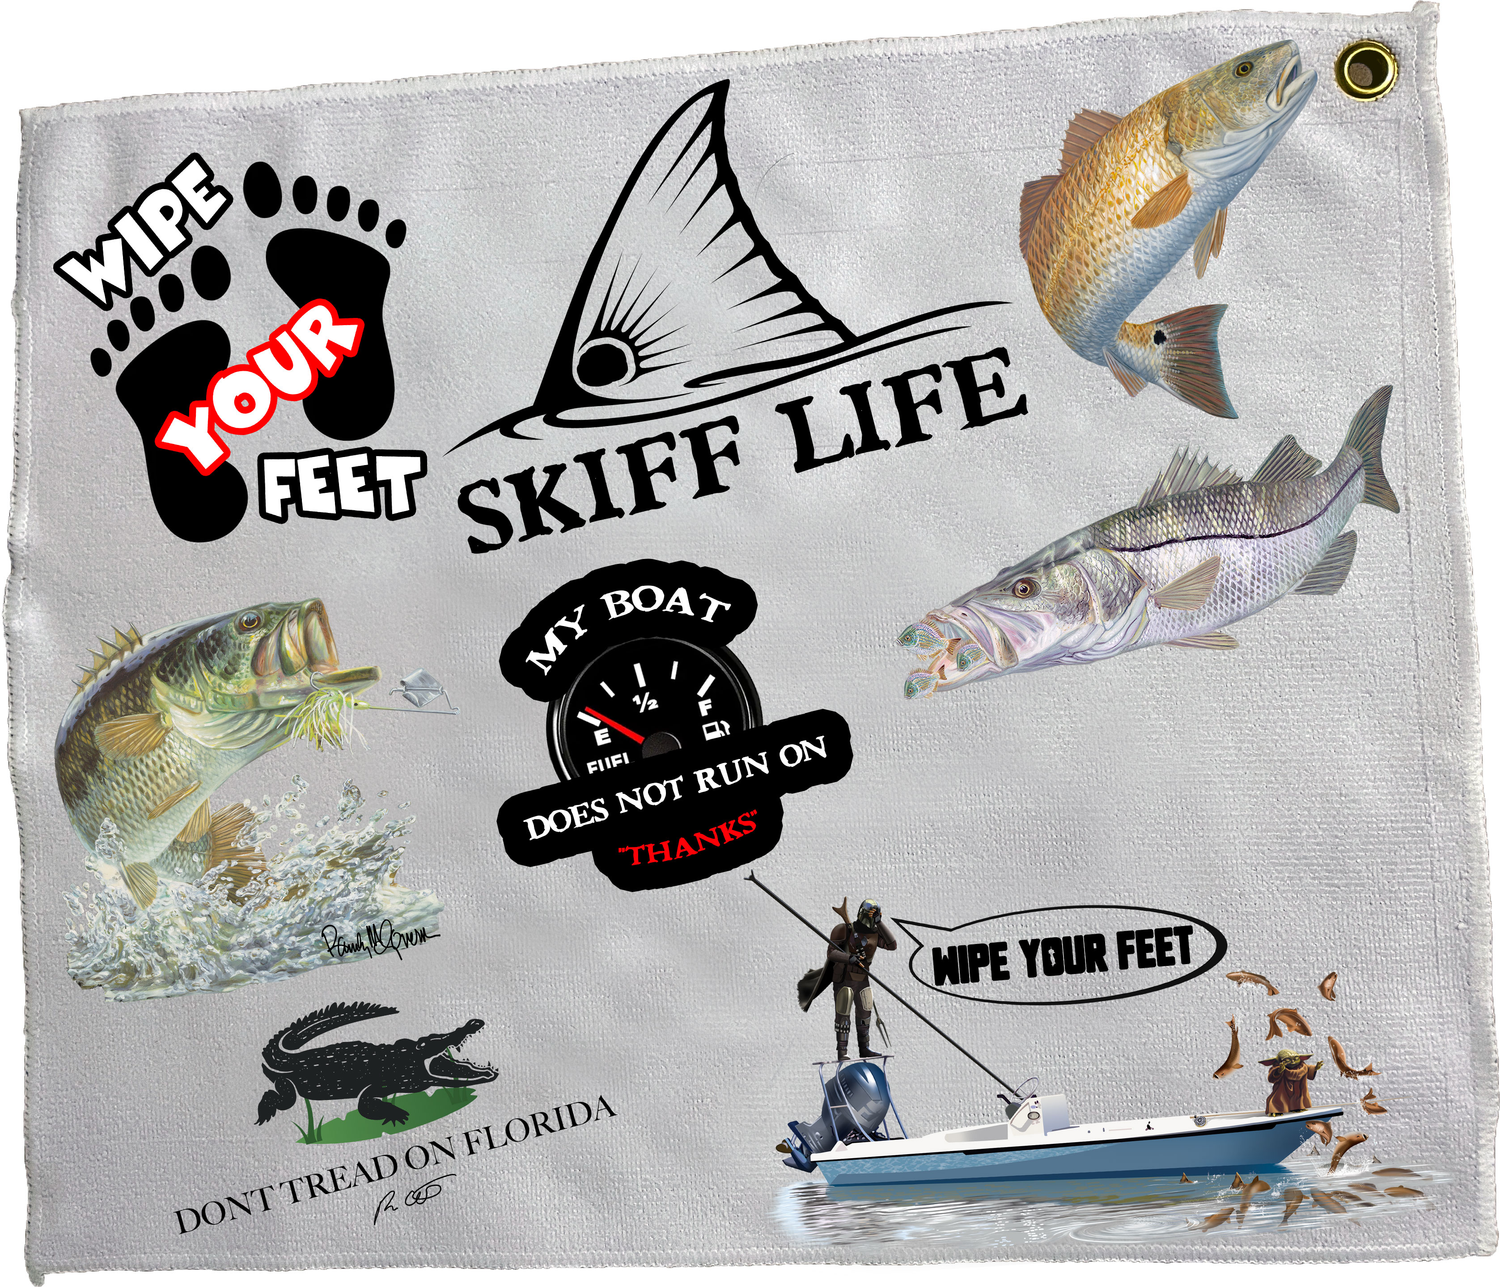 Fishing & Boating Accessories – Skiff Life